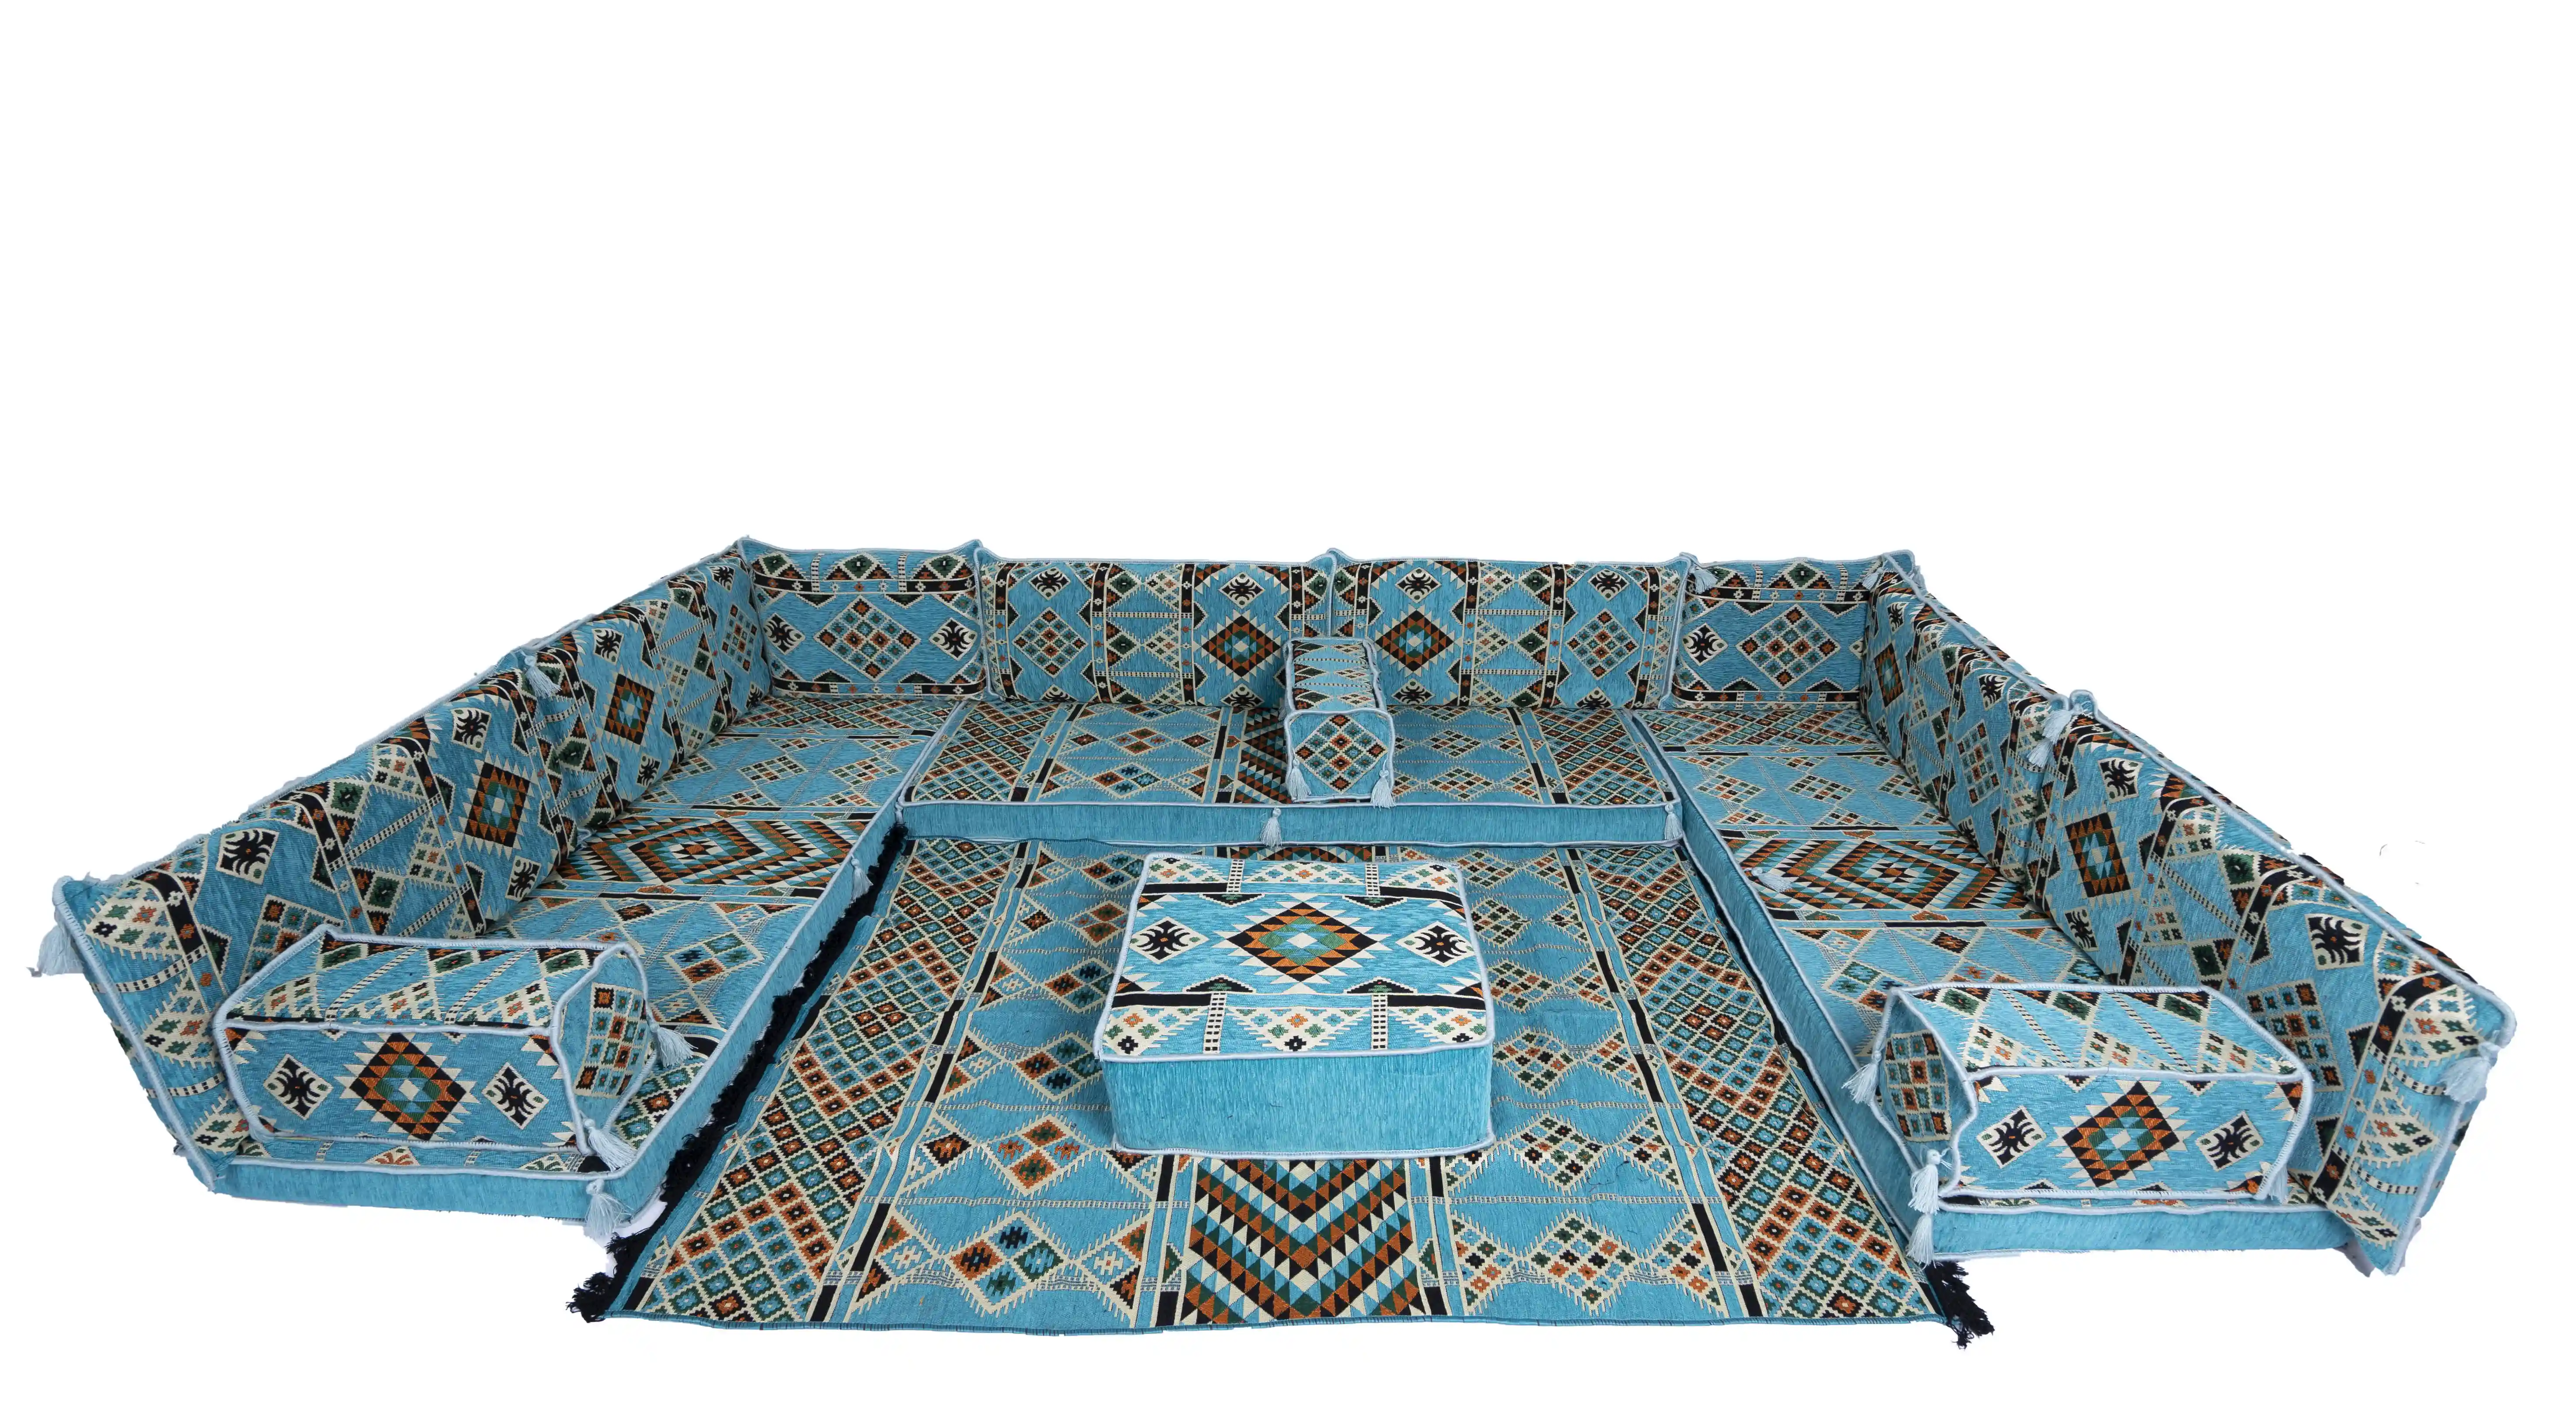 Juego de sofás árabes en forma de U, Jalsa árabe marrón, sofá seccional, almohadas de suelo, cojines de suelo, Majlis árabe, diseño tradicional árabe